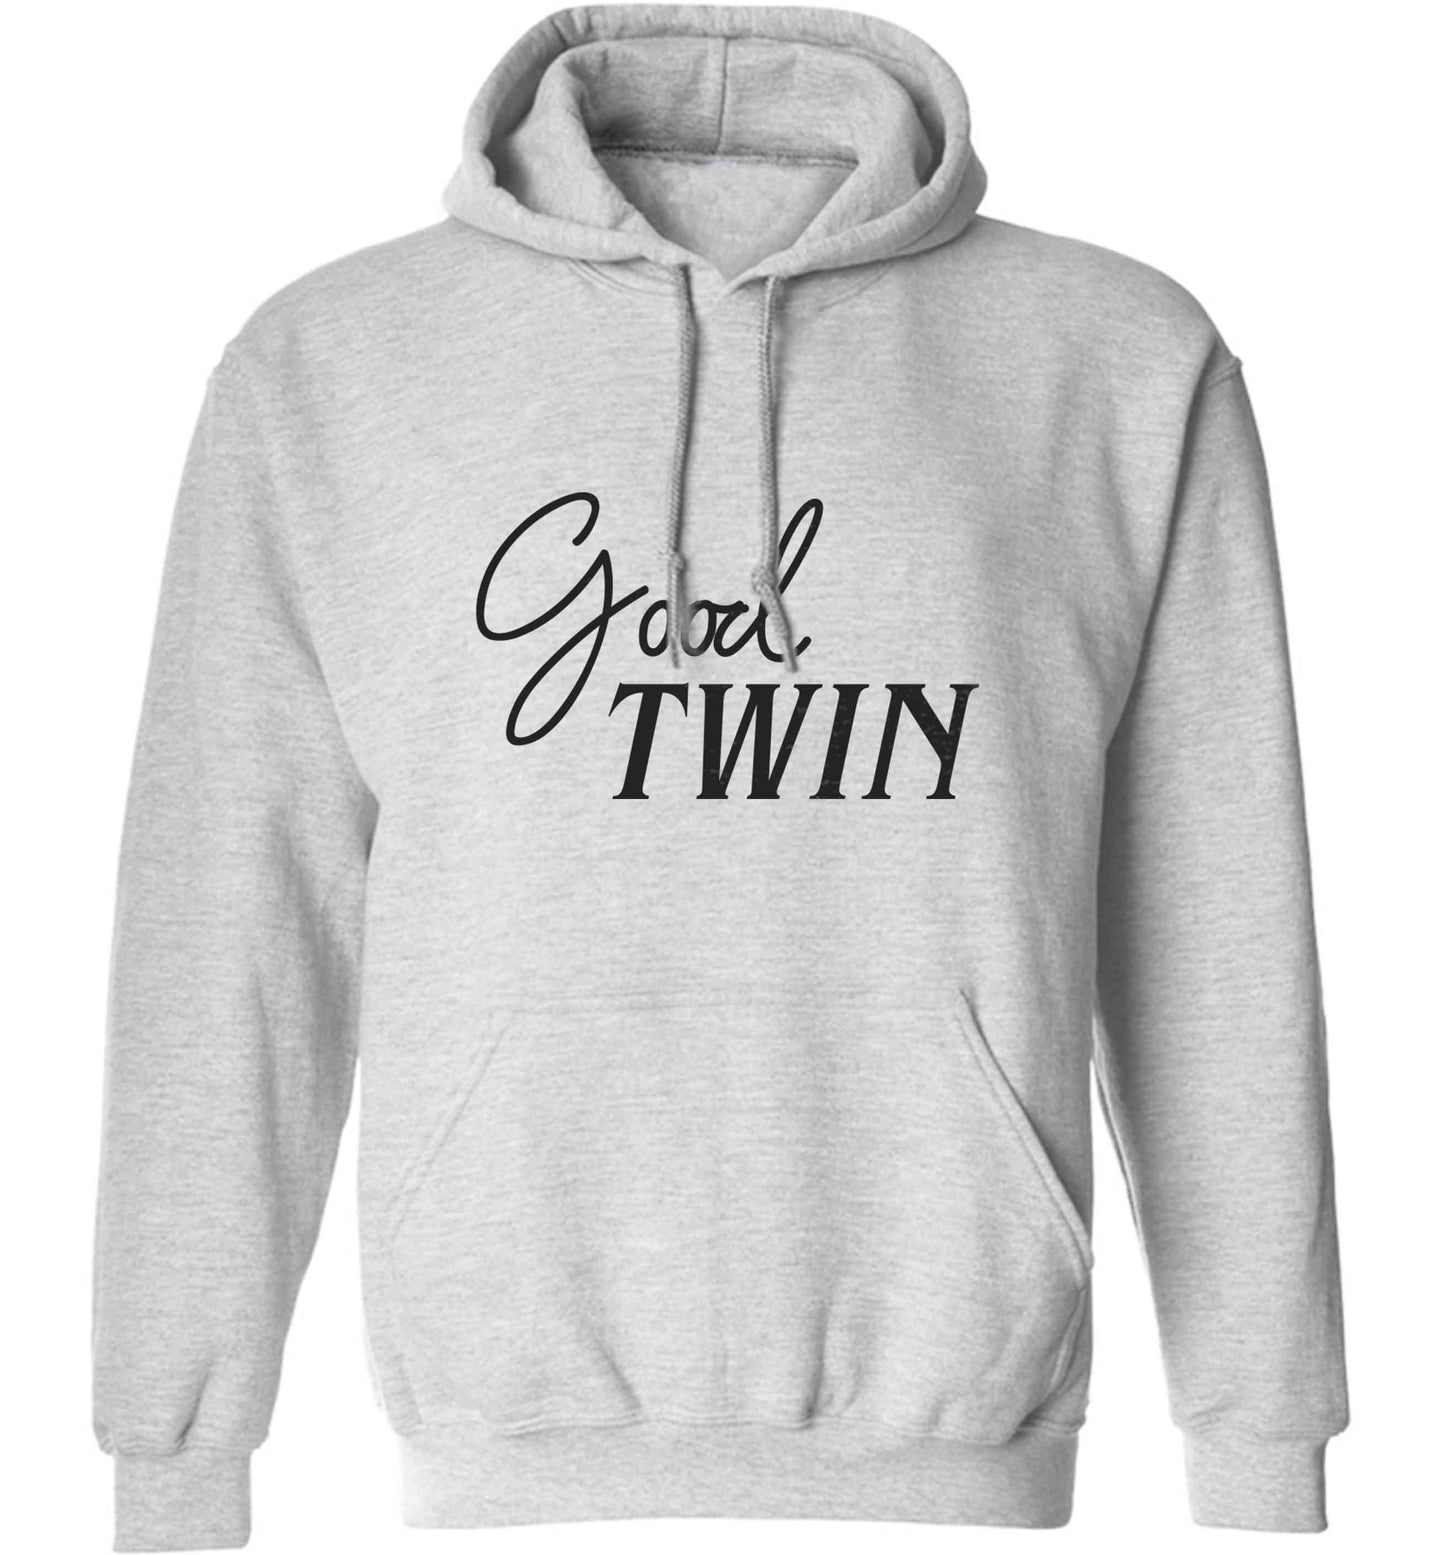 Good twin adults unisex grey hoodie 2XL